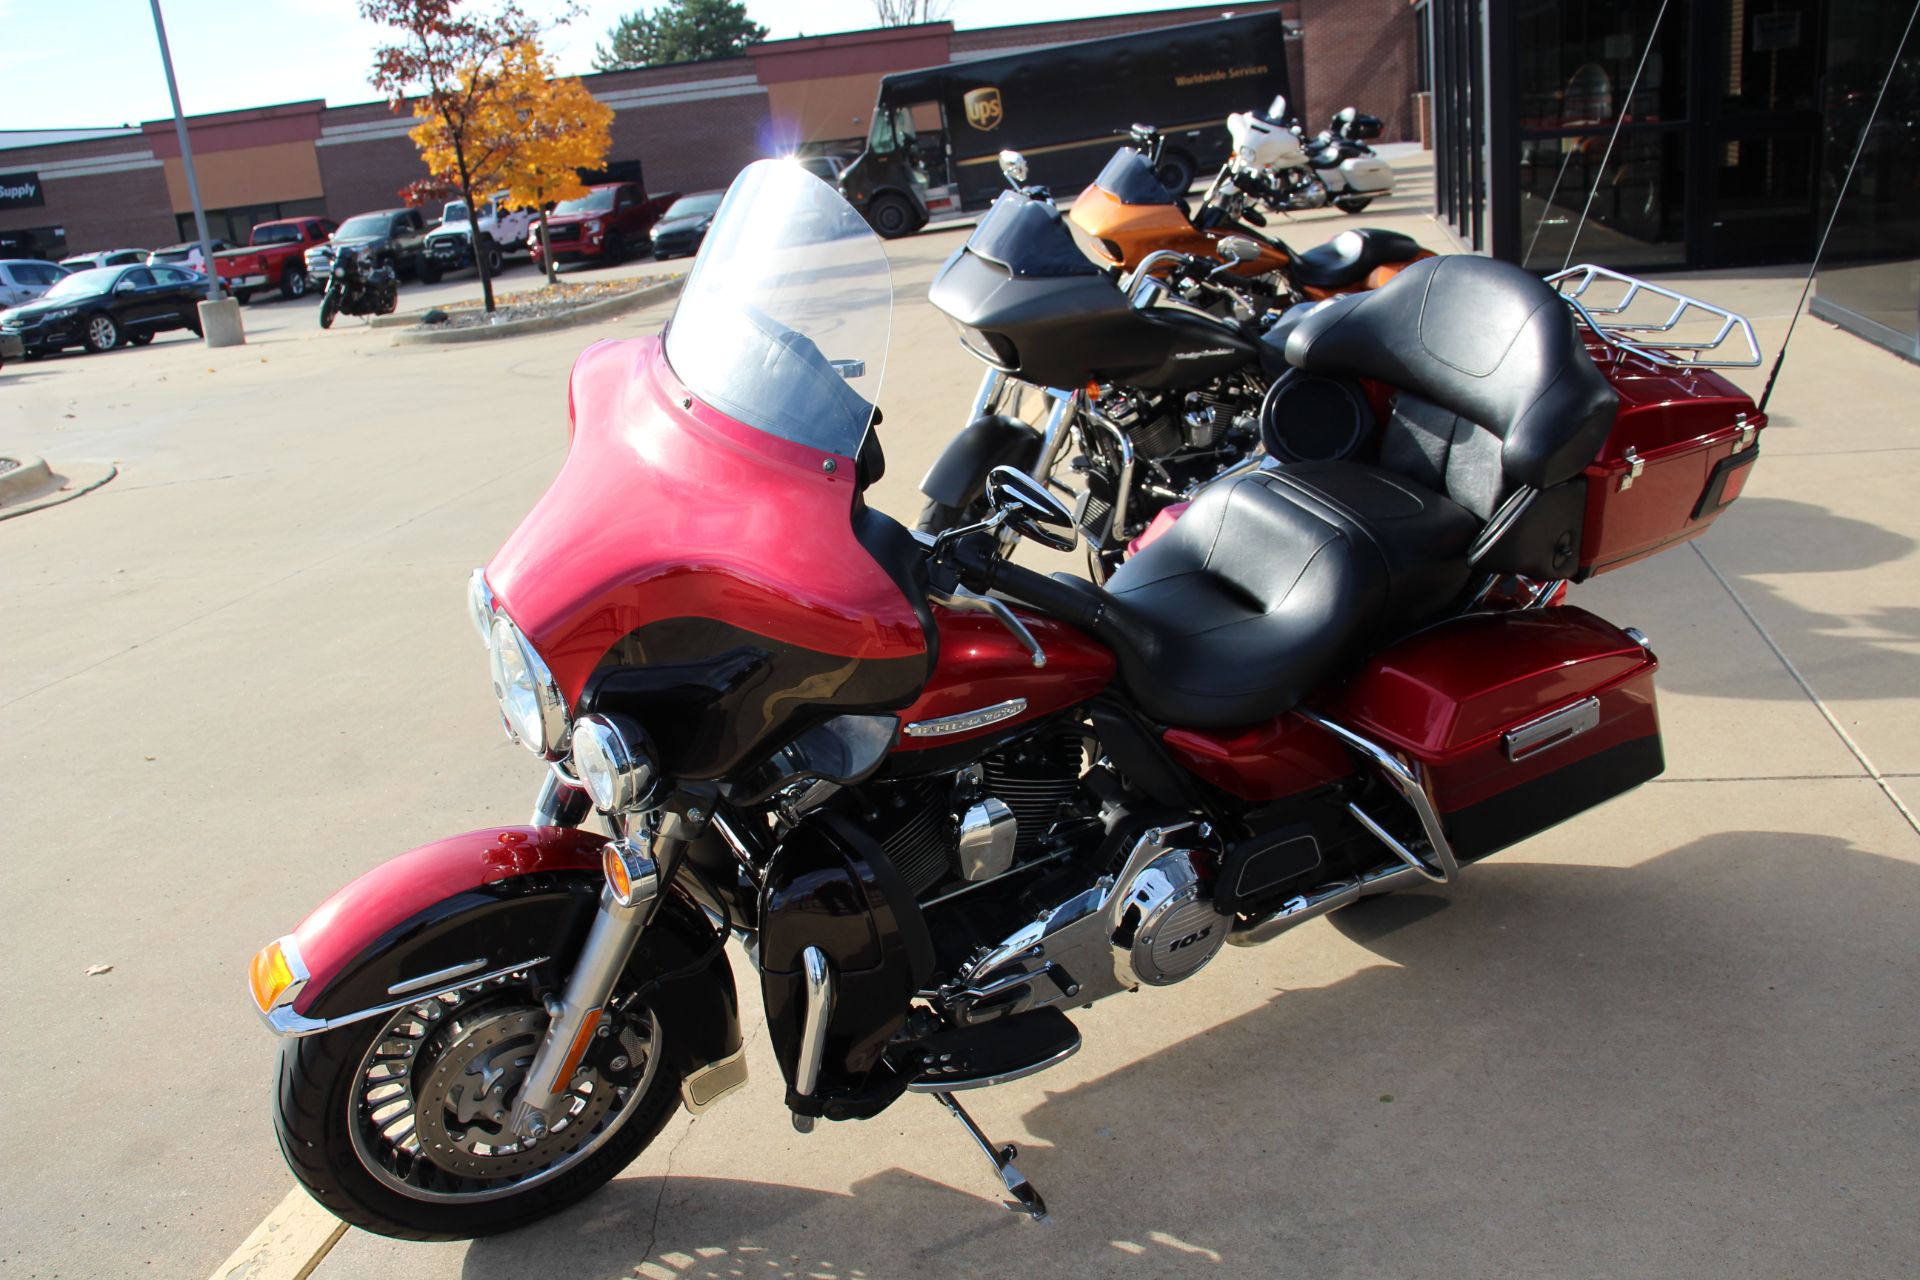 2013 Harley-Davidson Electra Glide® Ultra Limited in Flint, Michigan - Photo 4